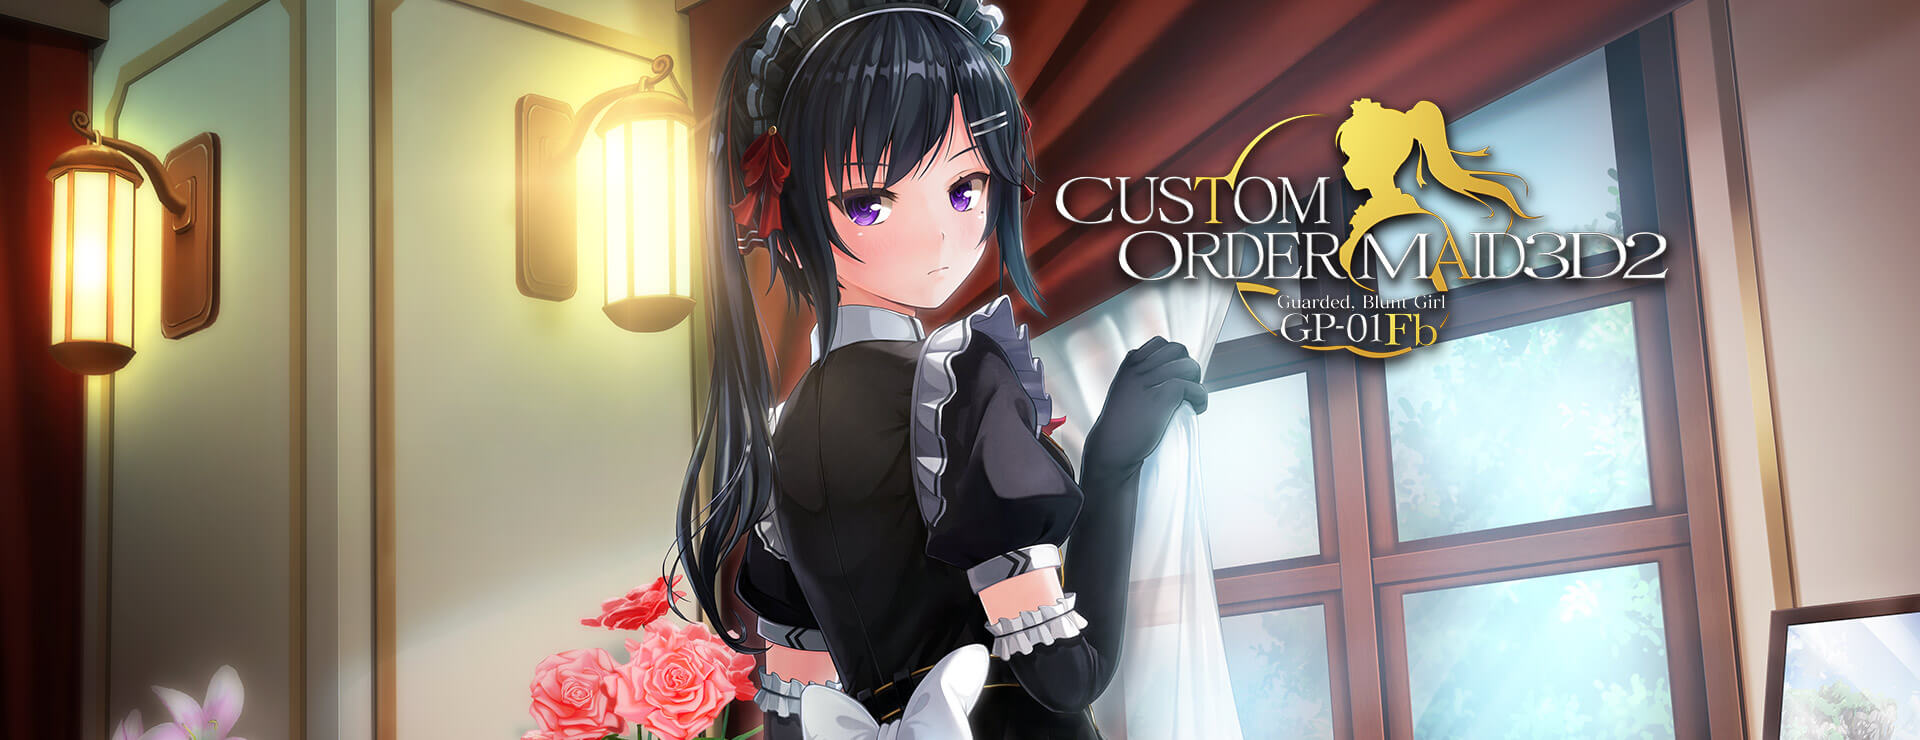 Custom Order Maid 3D2 Guarded, Blunt Girl GP-01fb DLC - Symulacja Gra